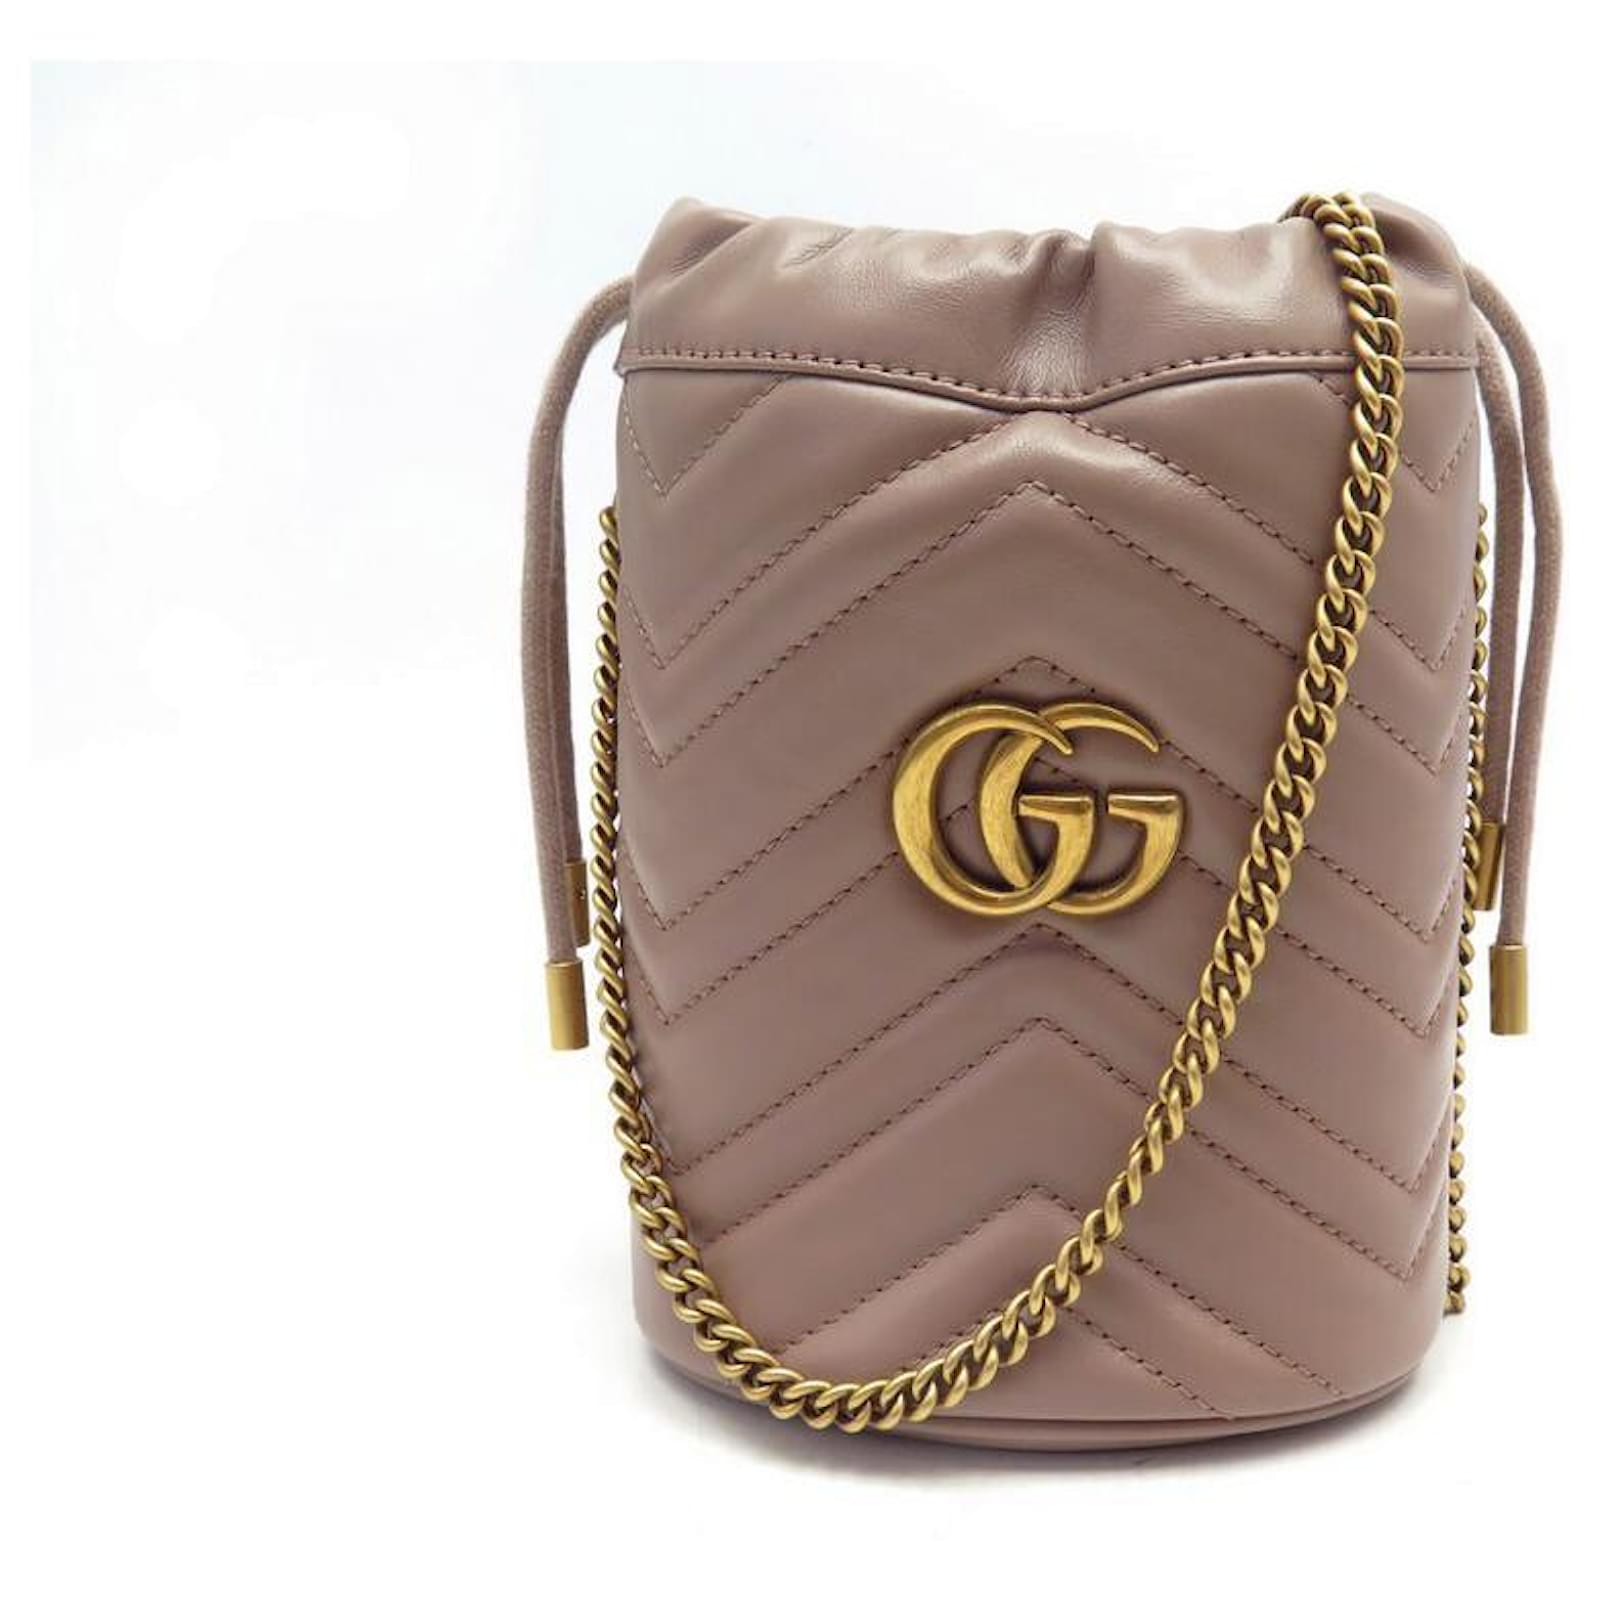 Brand new Gucci bag original everything